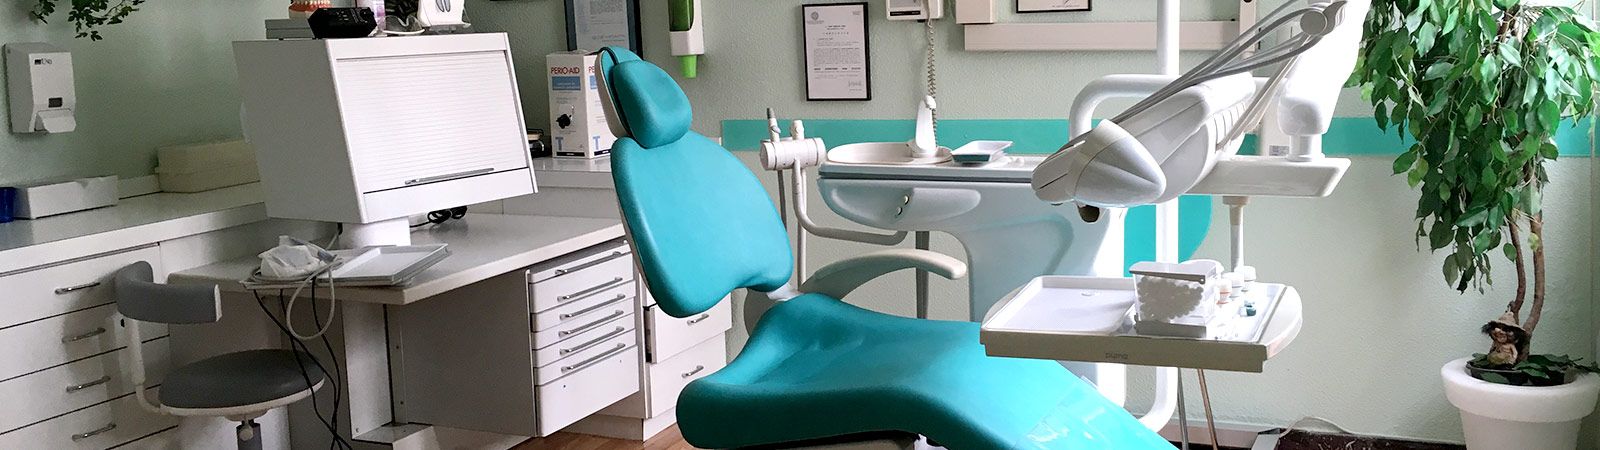 Clínica Dental Doctor Oria - Banner1